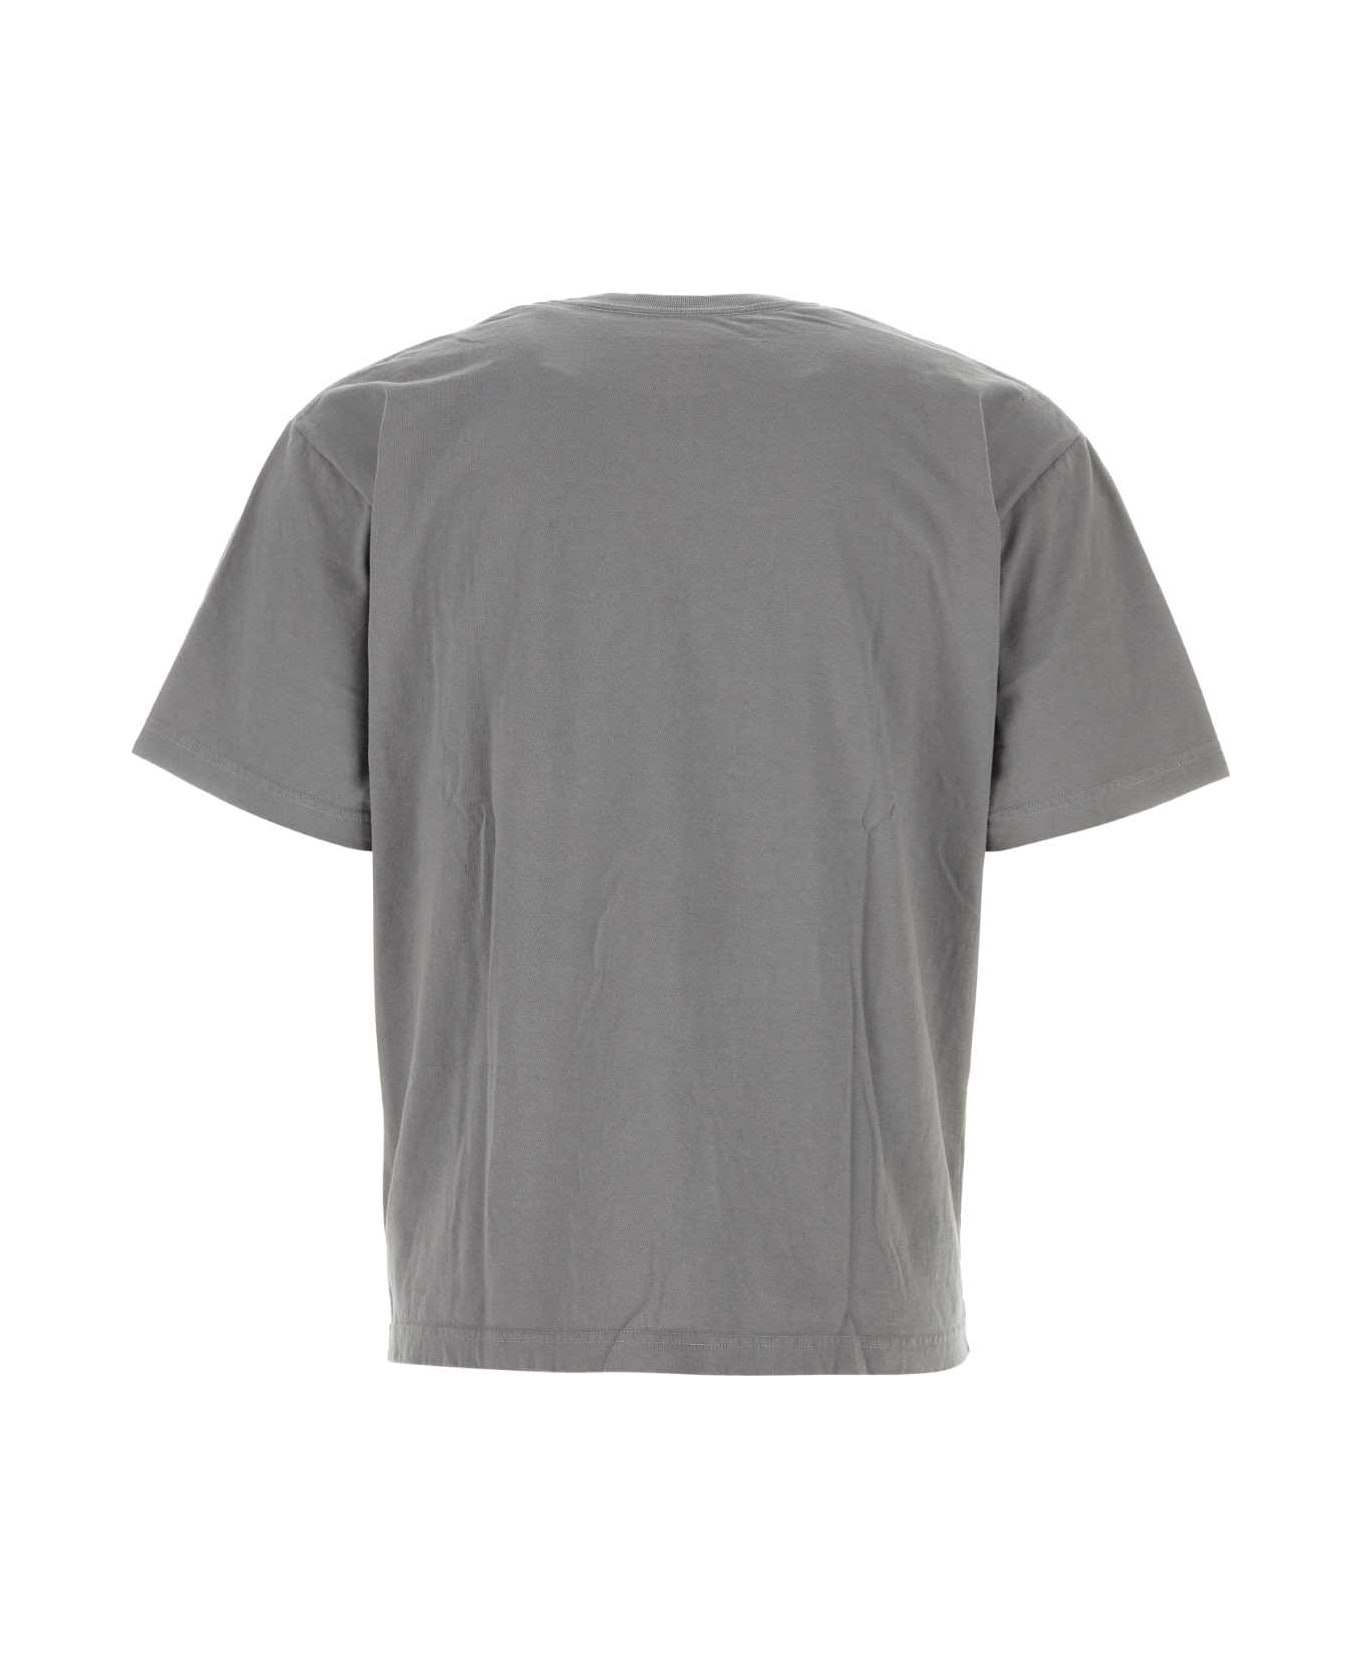 Yohji Yamamoto Grey Cotton Yohji Yamamoto X Neighborhood T-shirt - grey